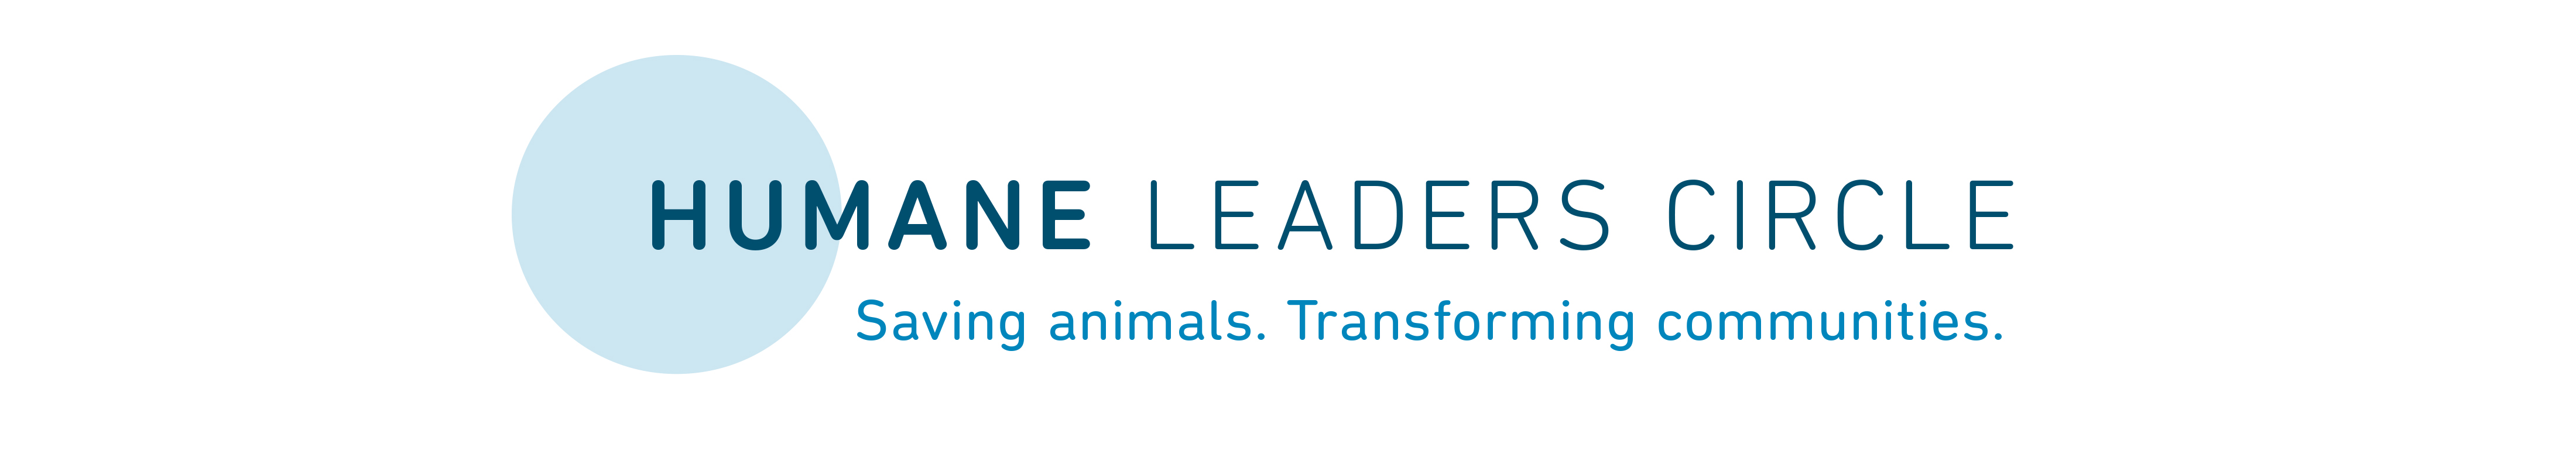 Humane Leaders Circle logo